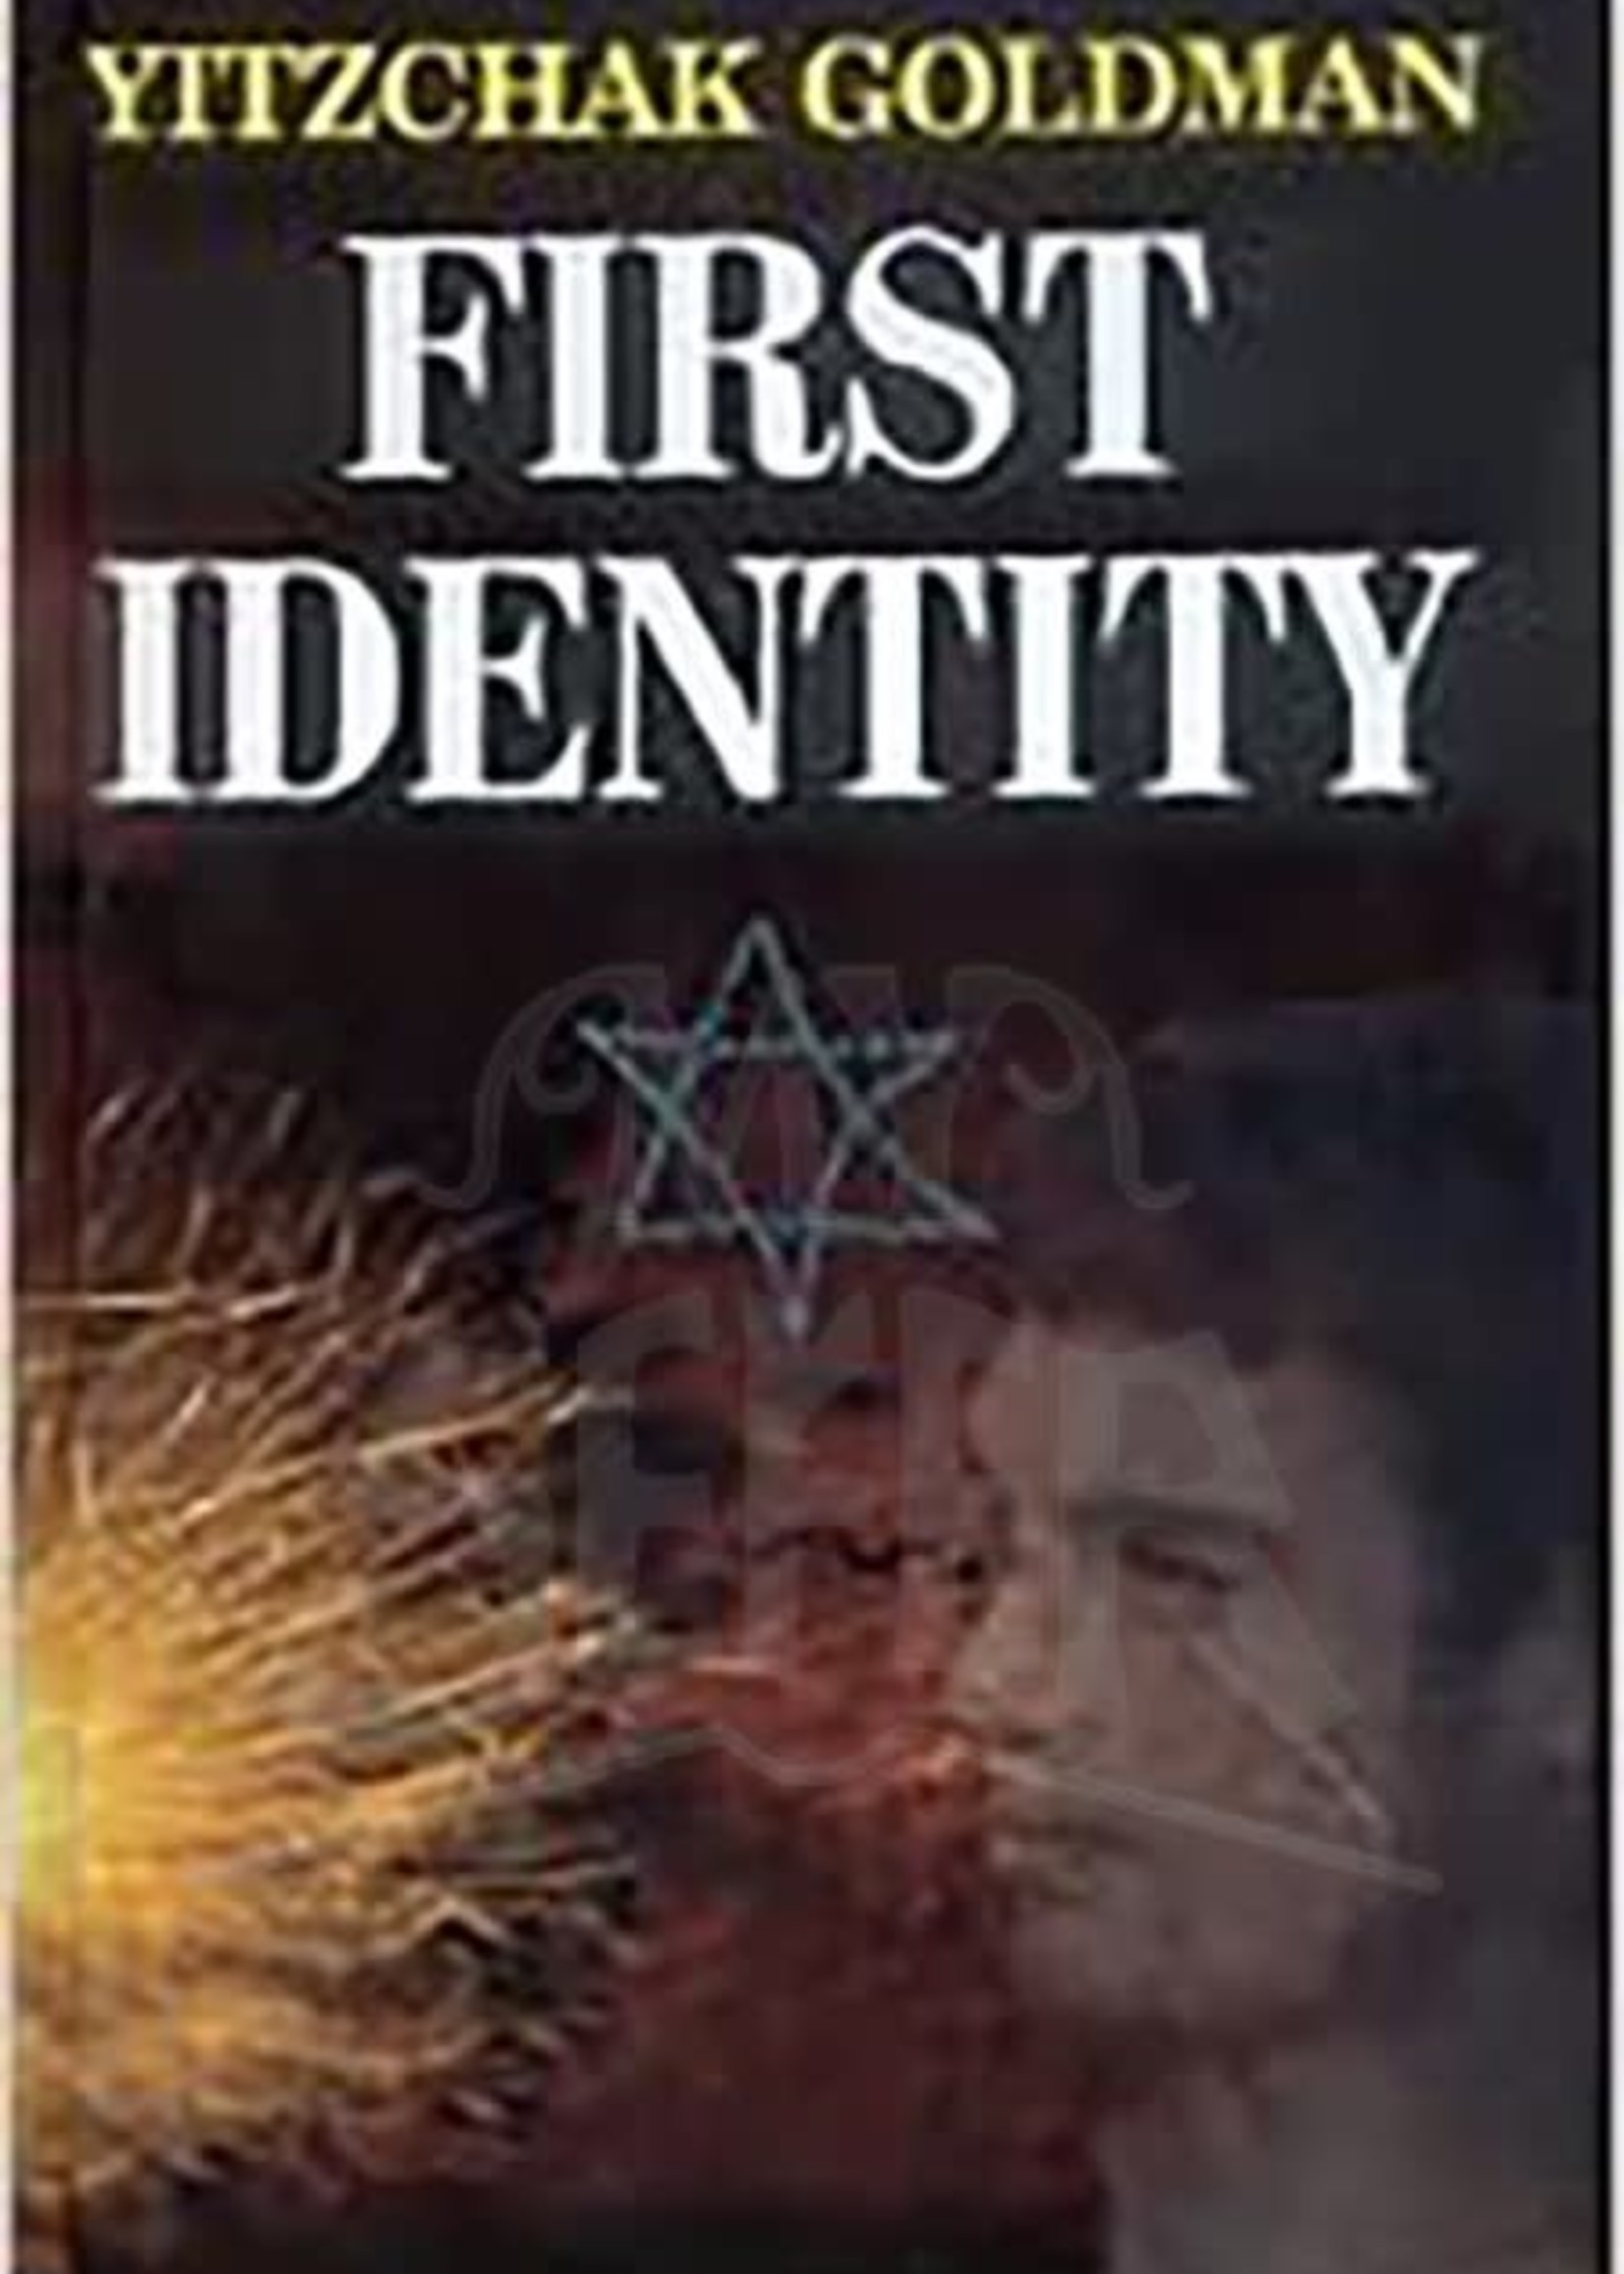 Yitzchak Goldman First Identity